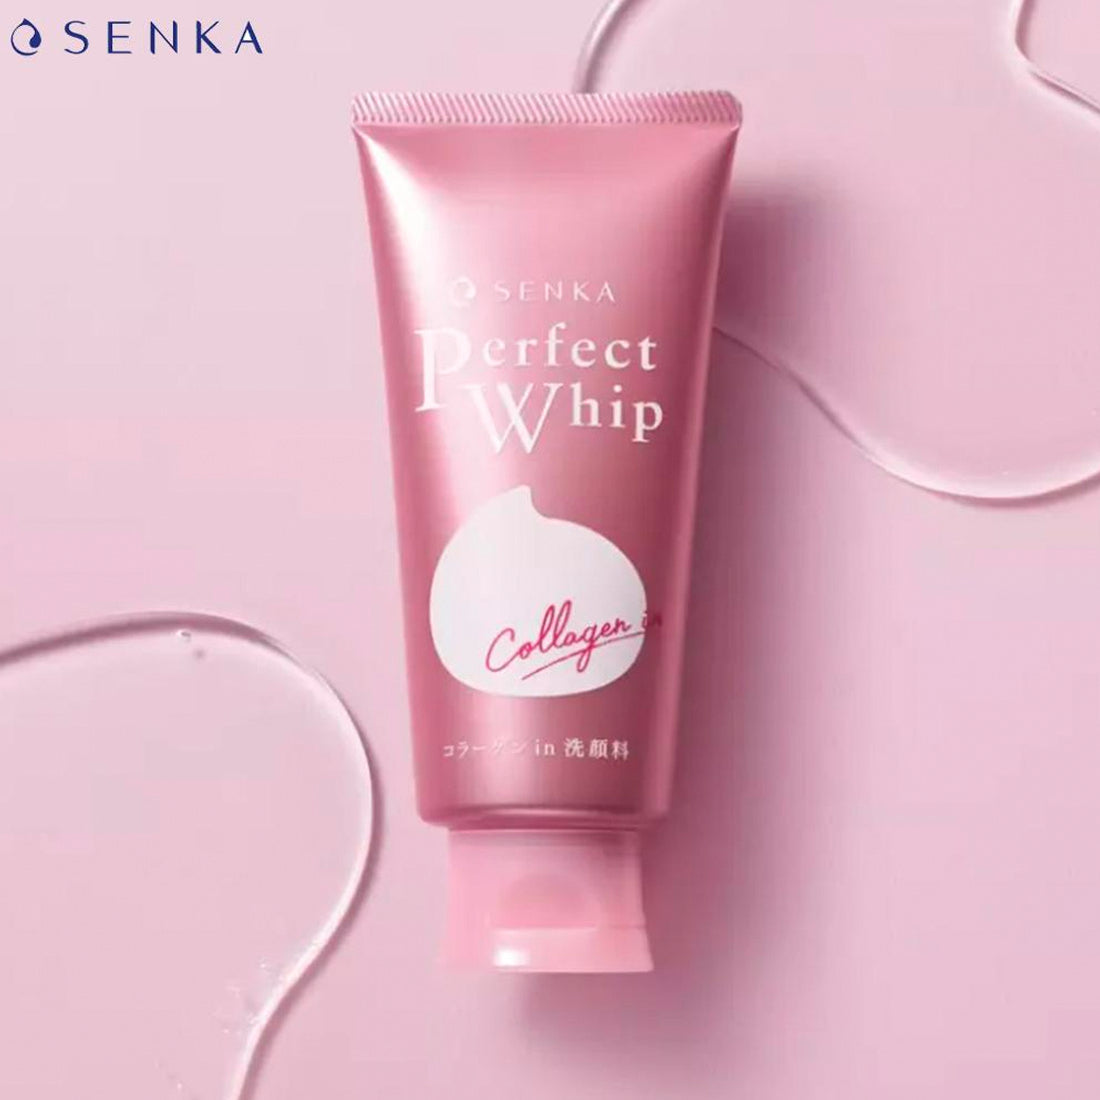 Shiseido - Senka Perfect Whip Face Wash Collagen In